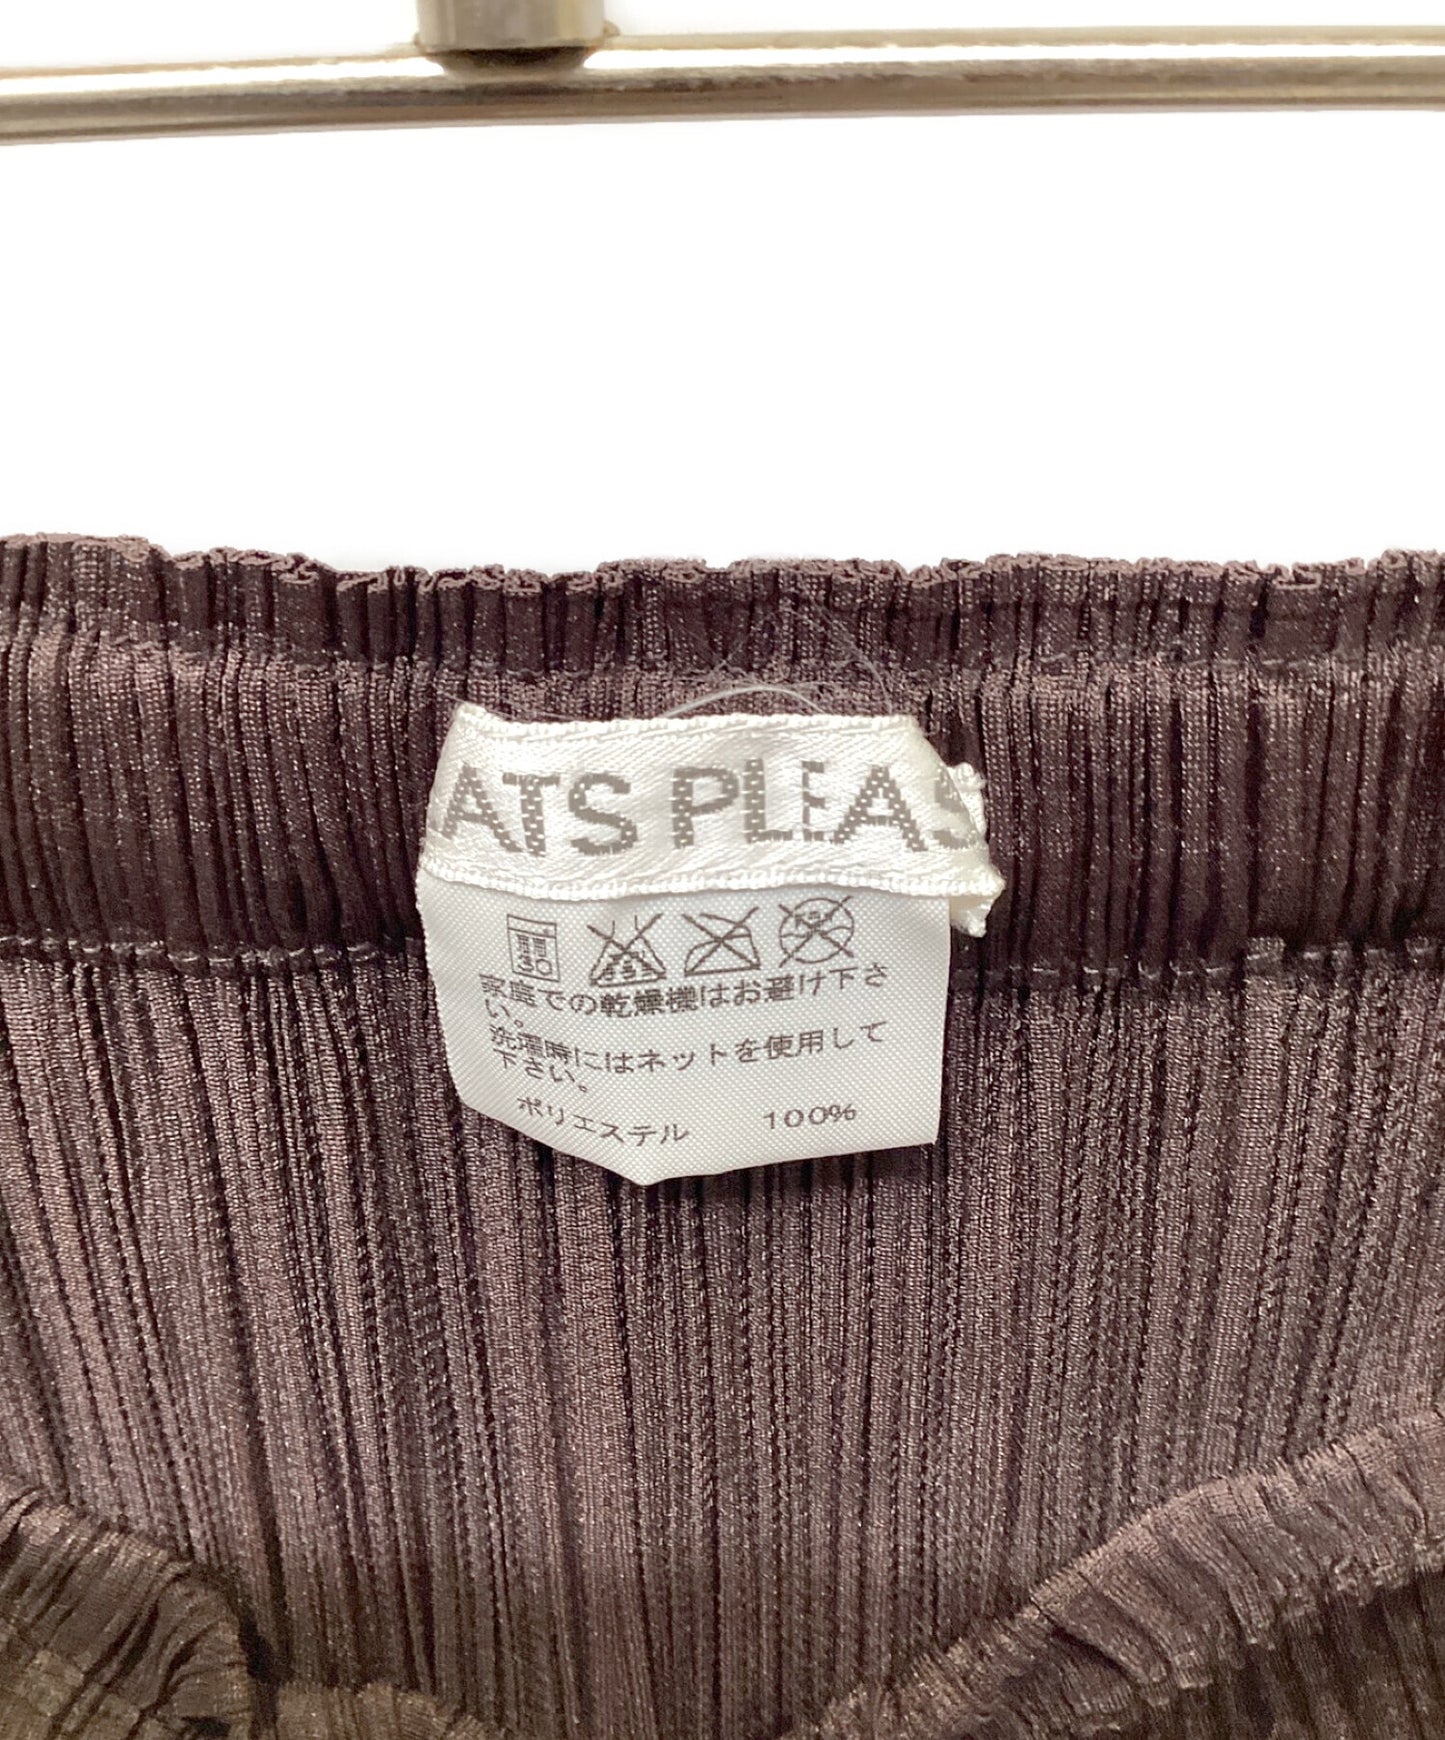 [Pre-owned] PLEATS PLEASE pleated skirt